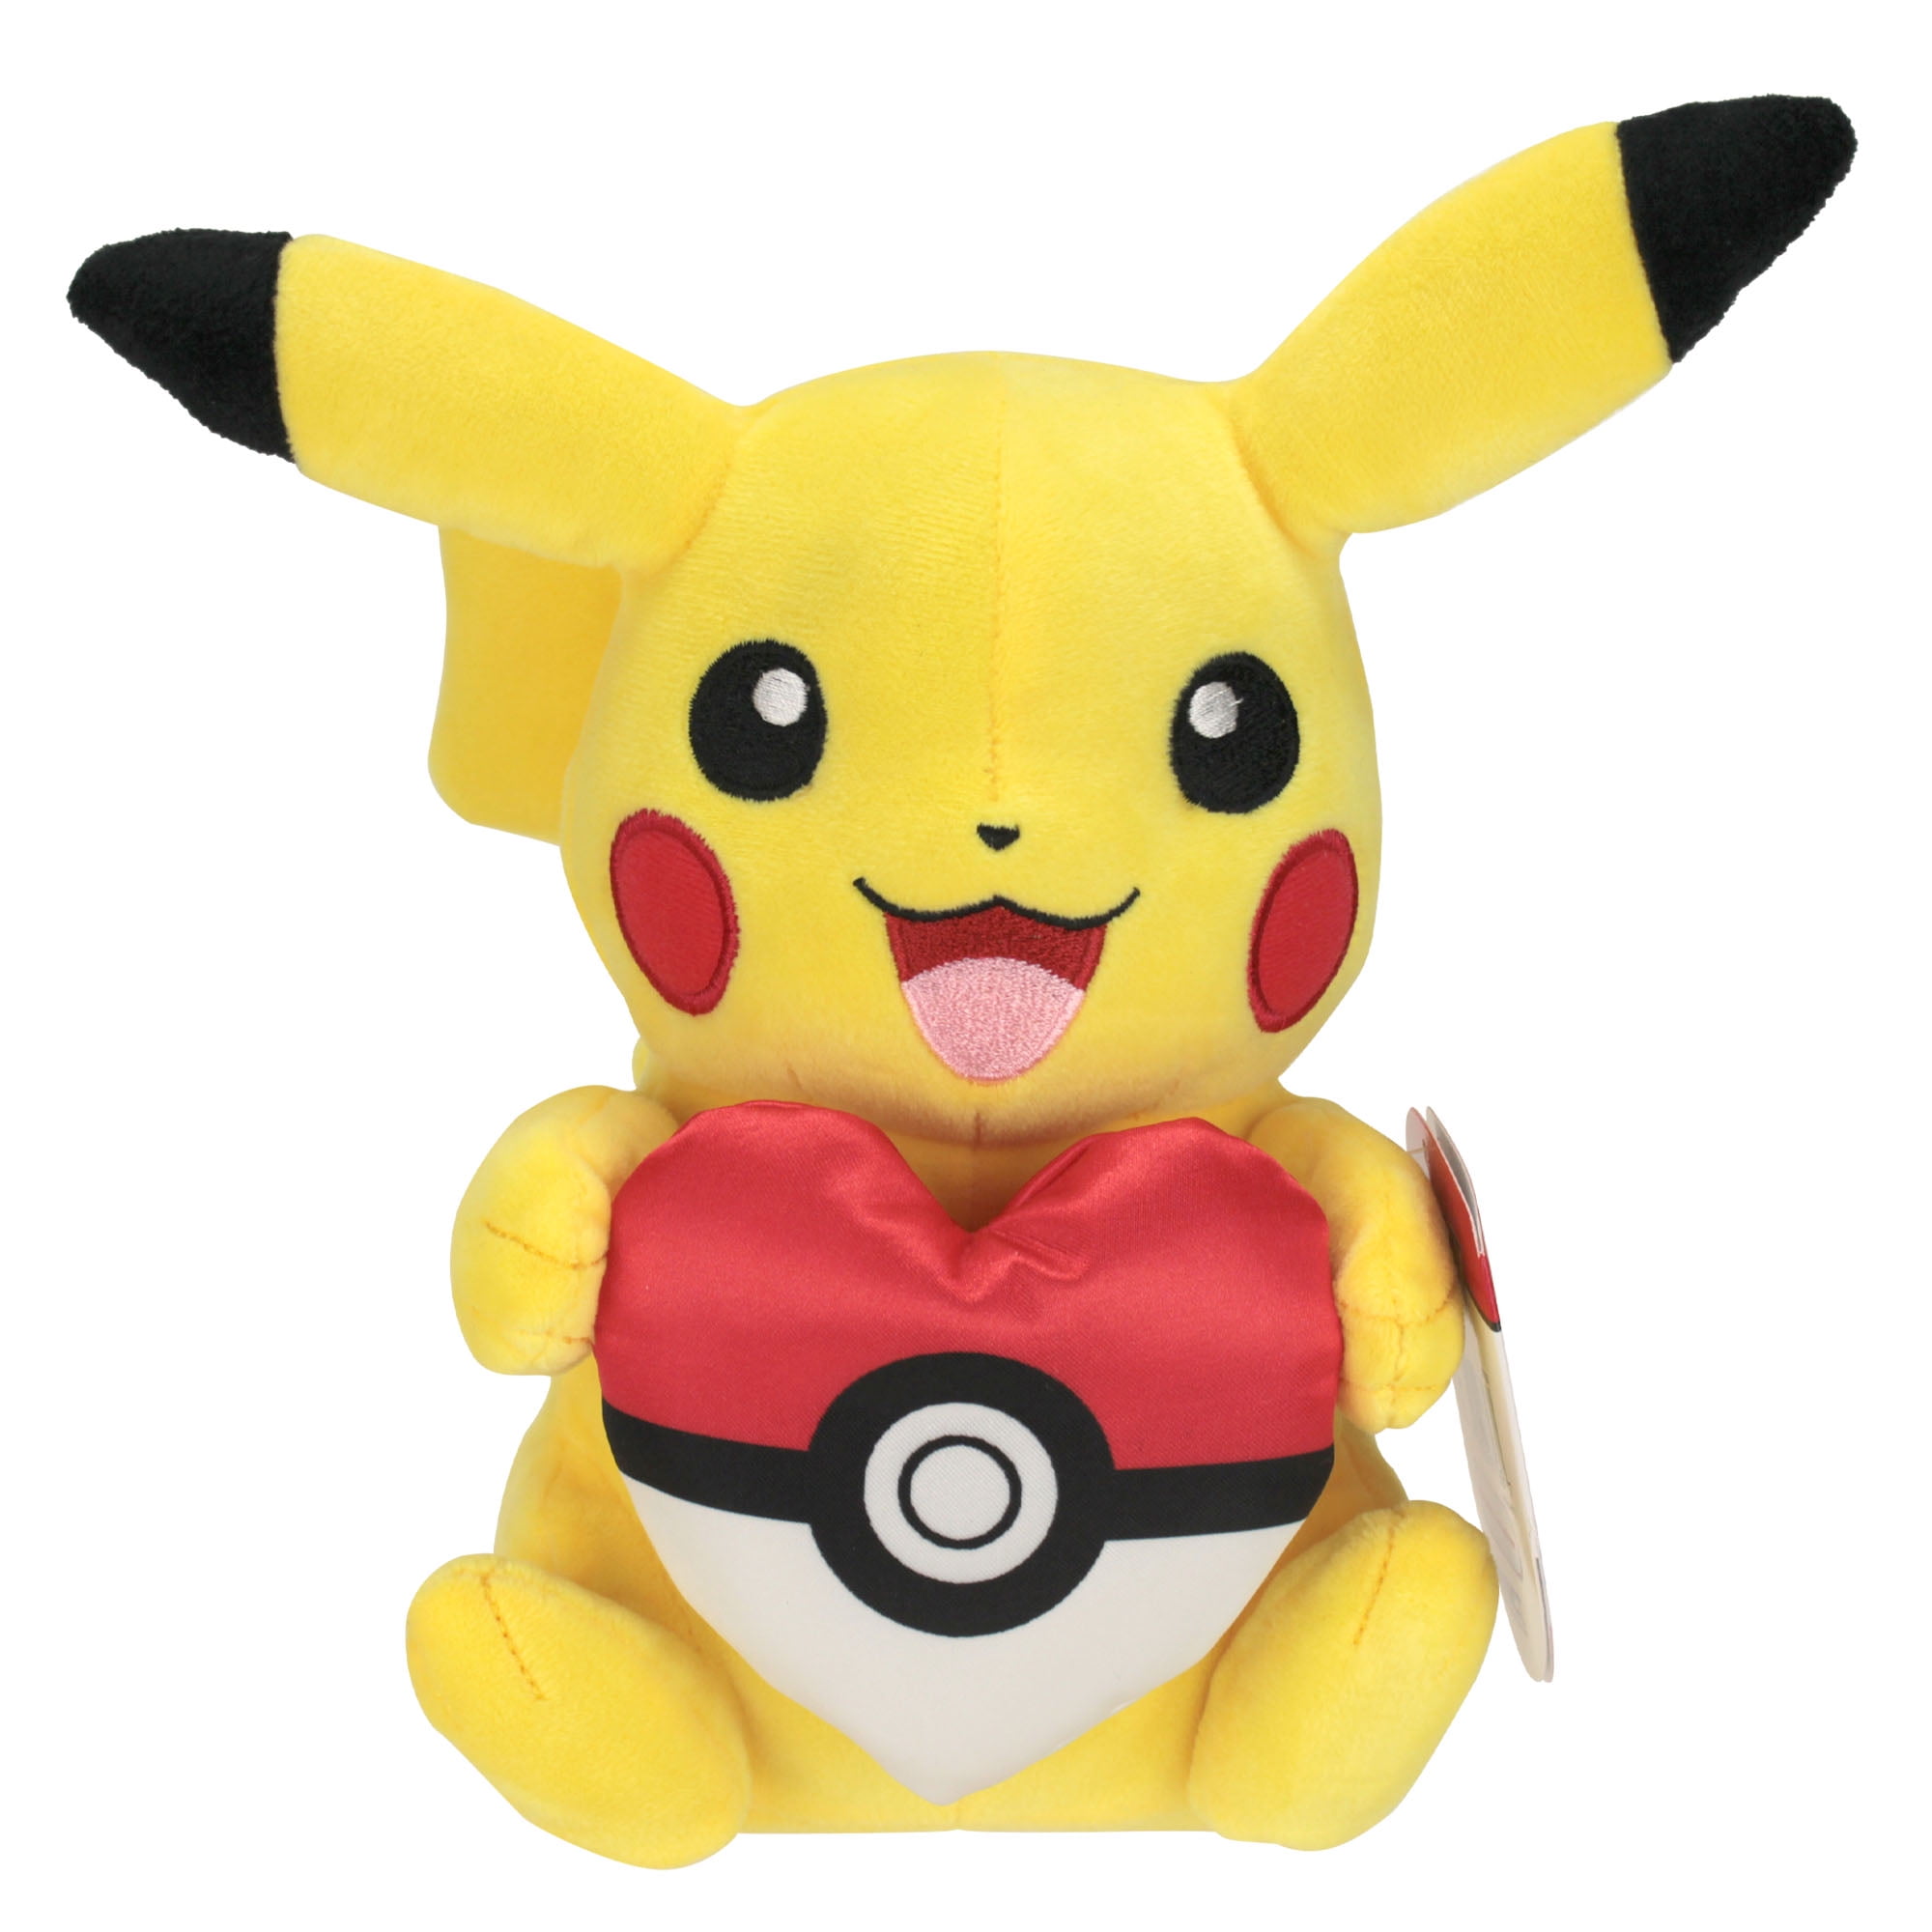 Limited Edition Pokémon Plush - 8